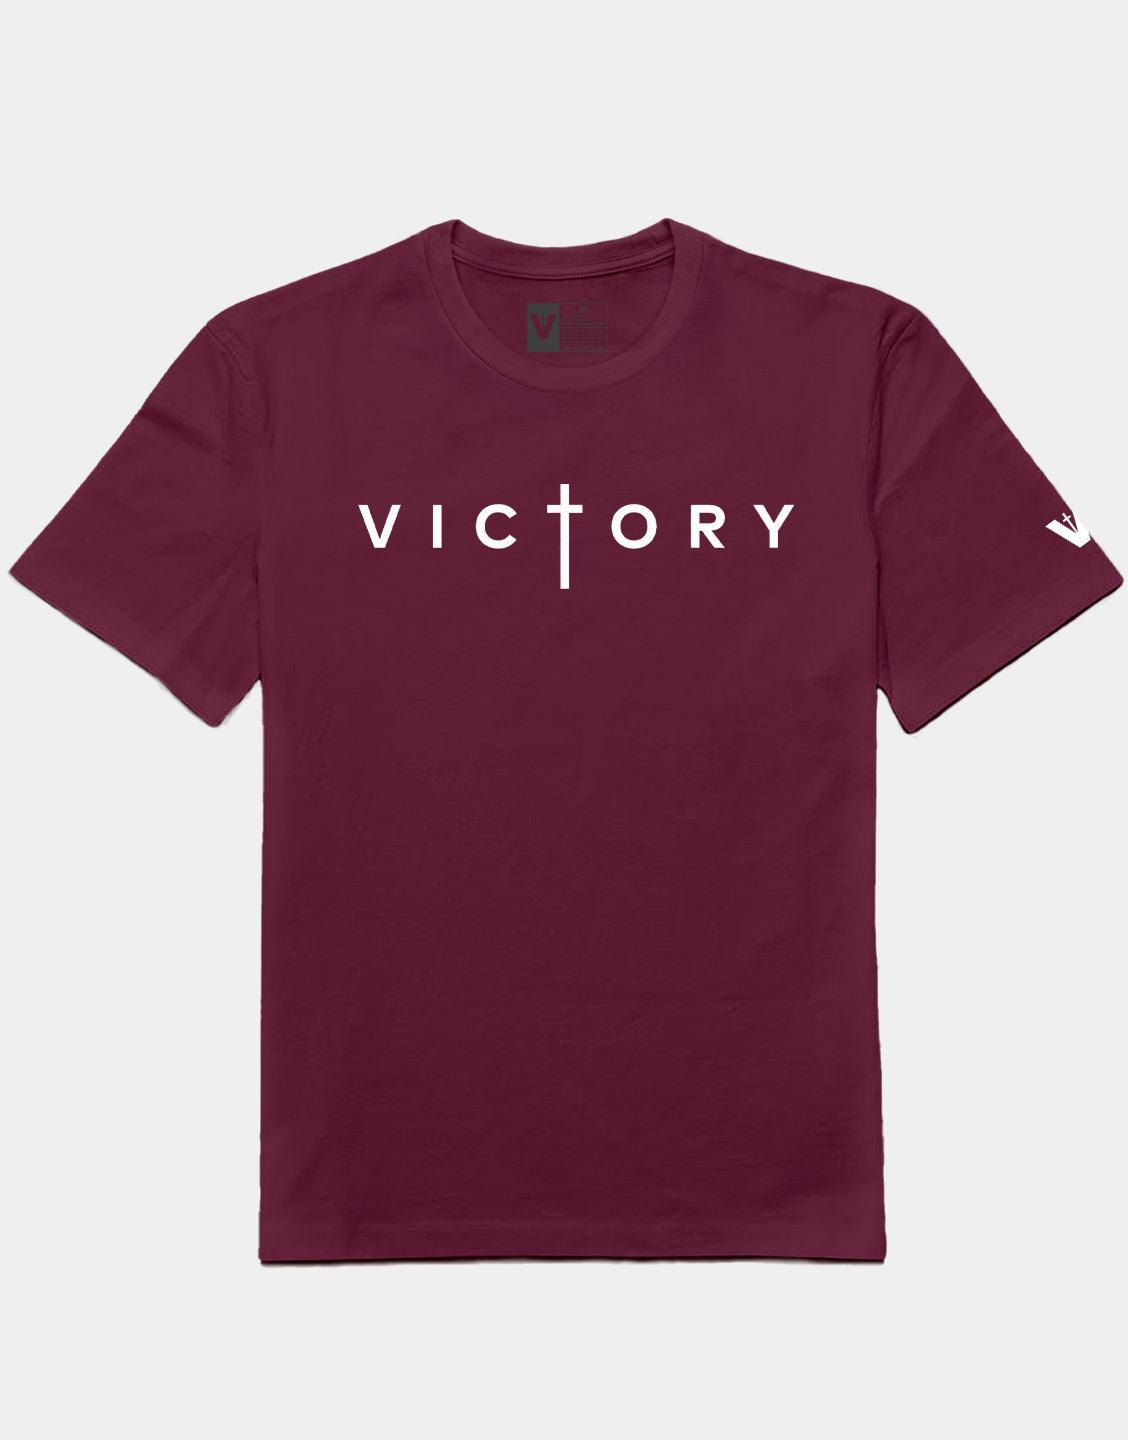 Victory Maroon T Shirt - VOTC Clothing